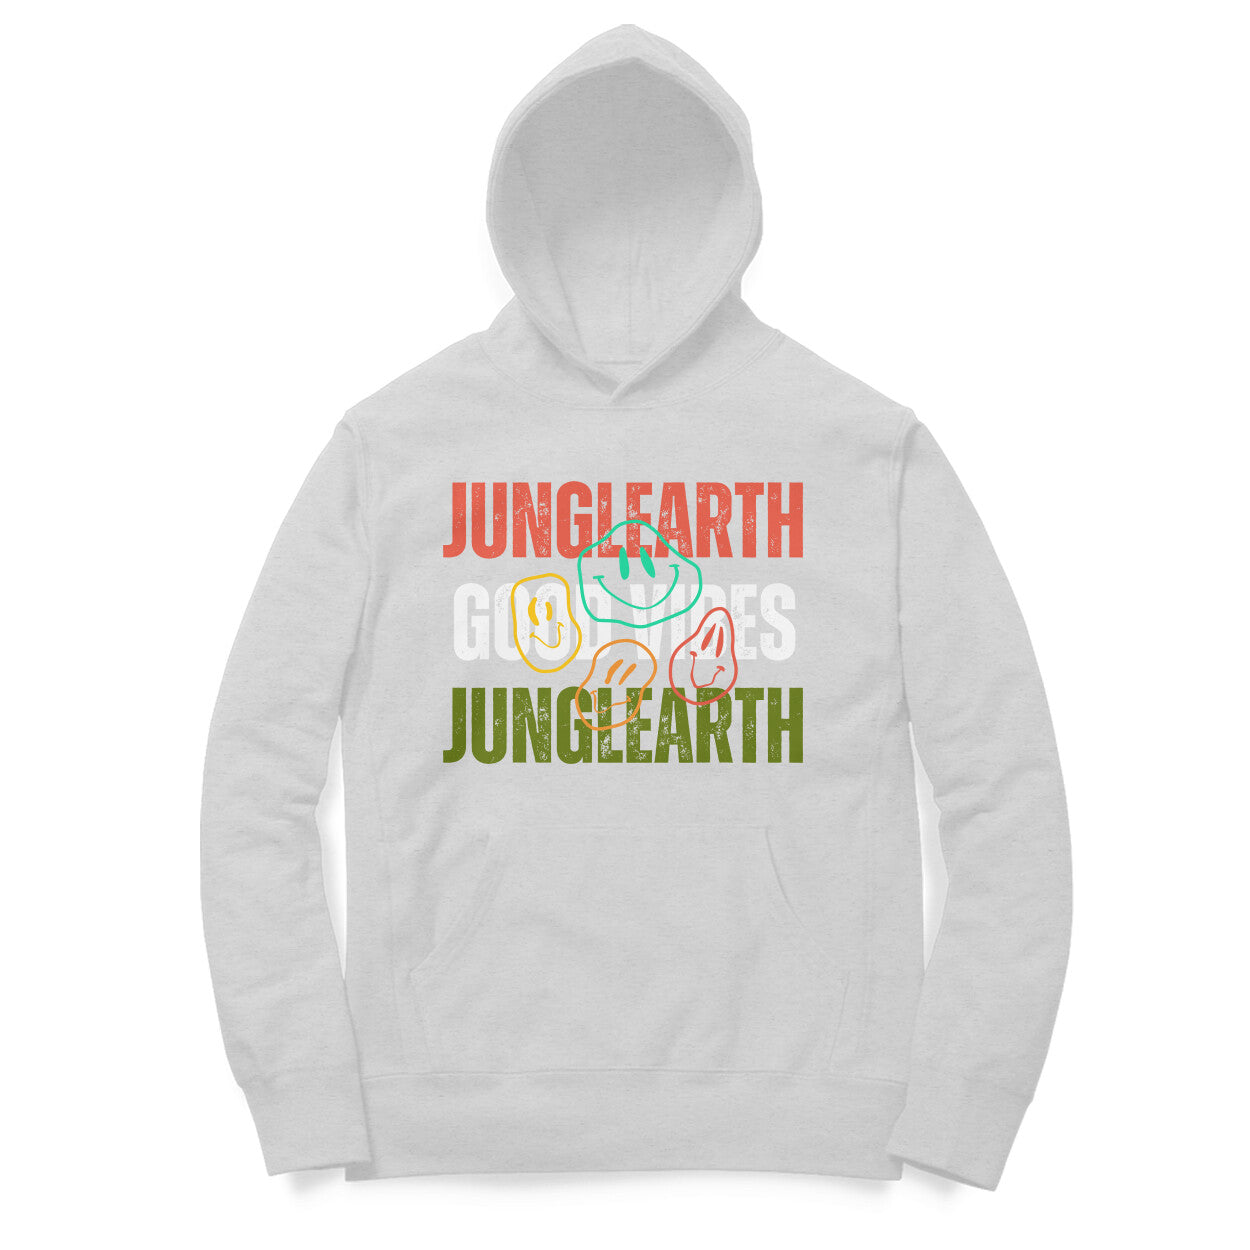 Junglearth Good Vibes hoodie